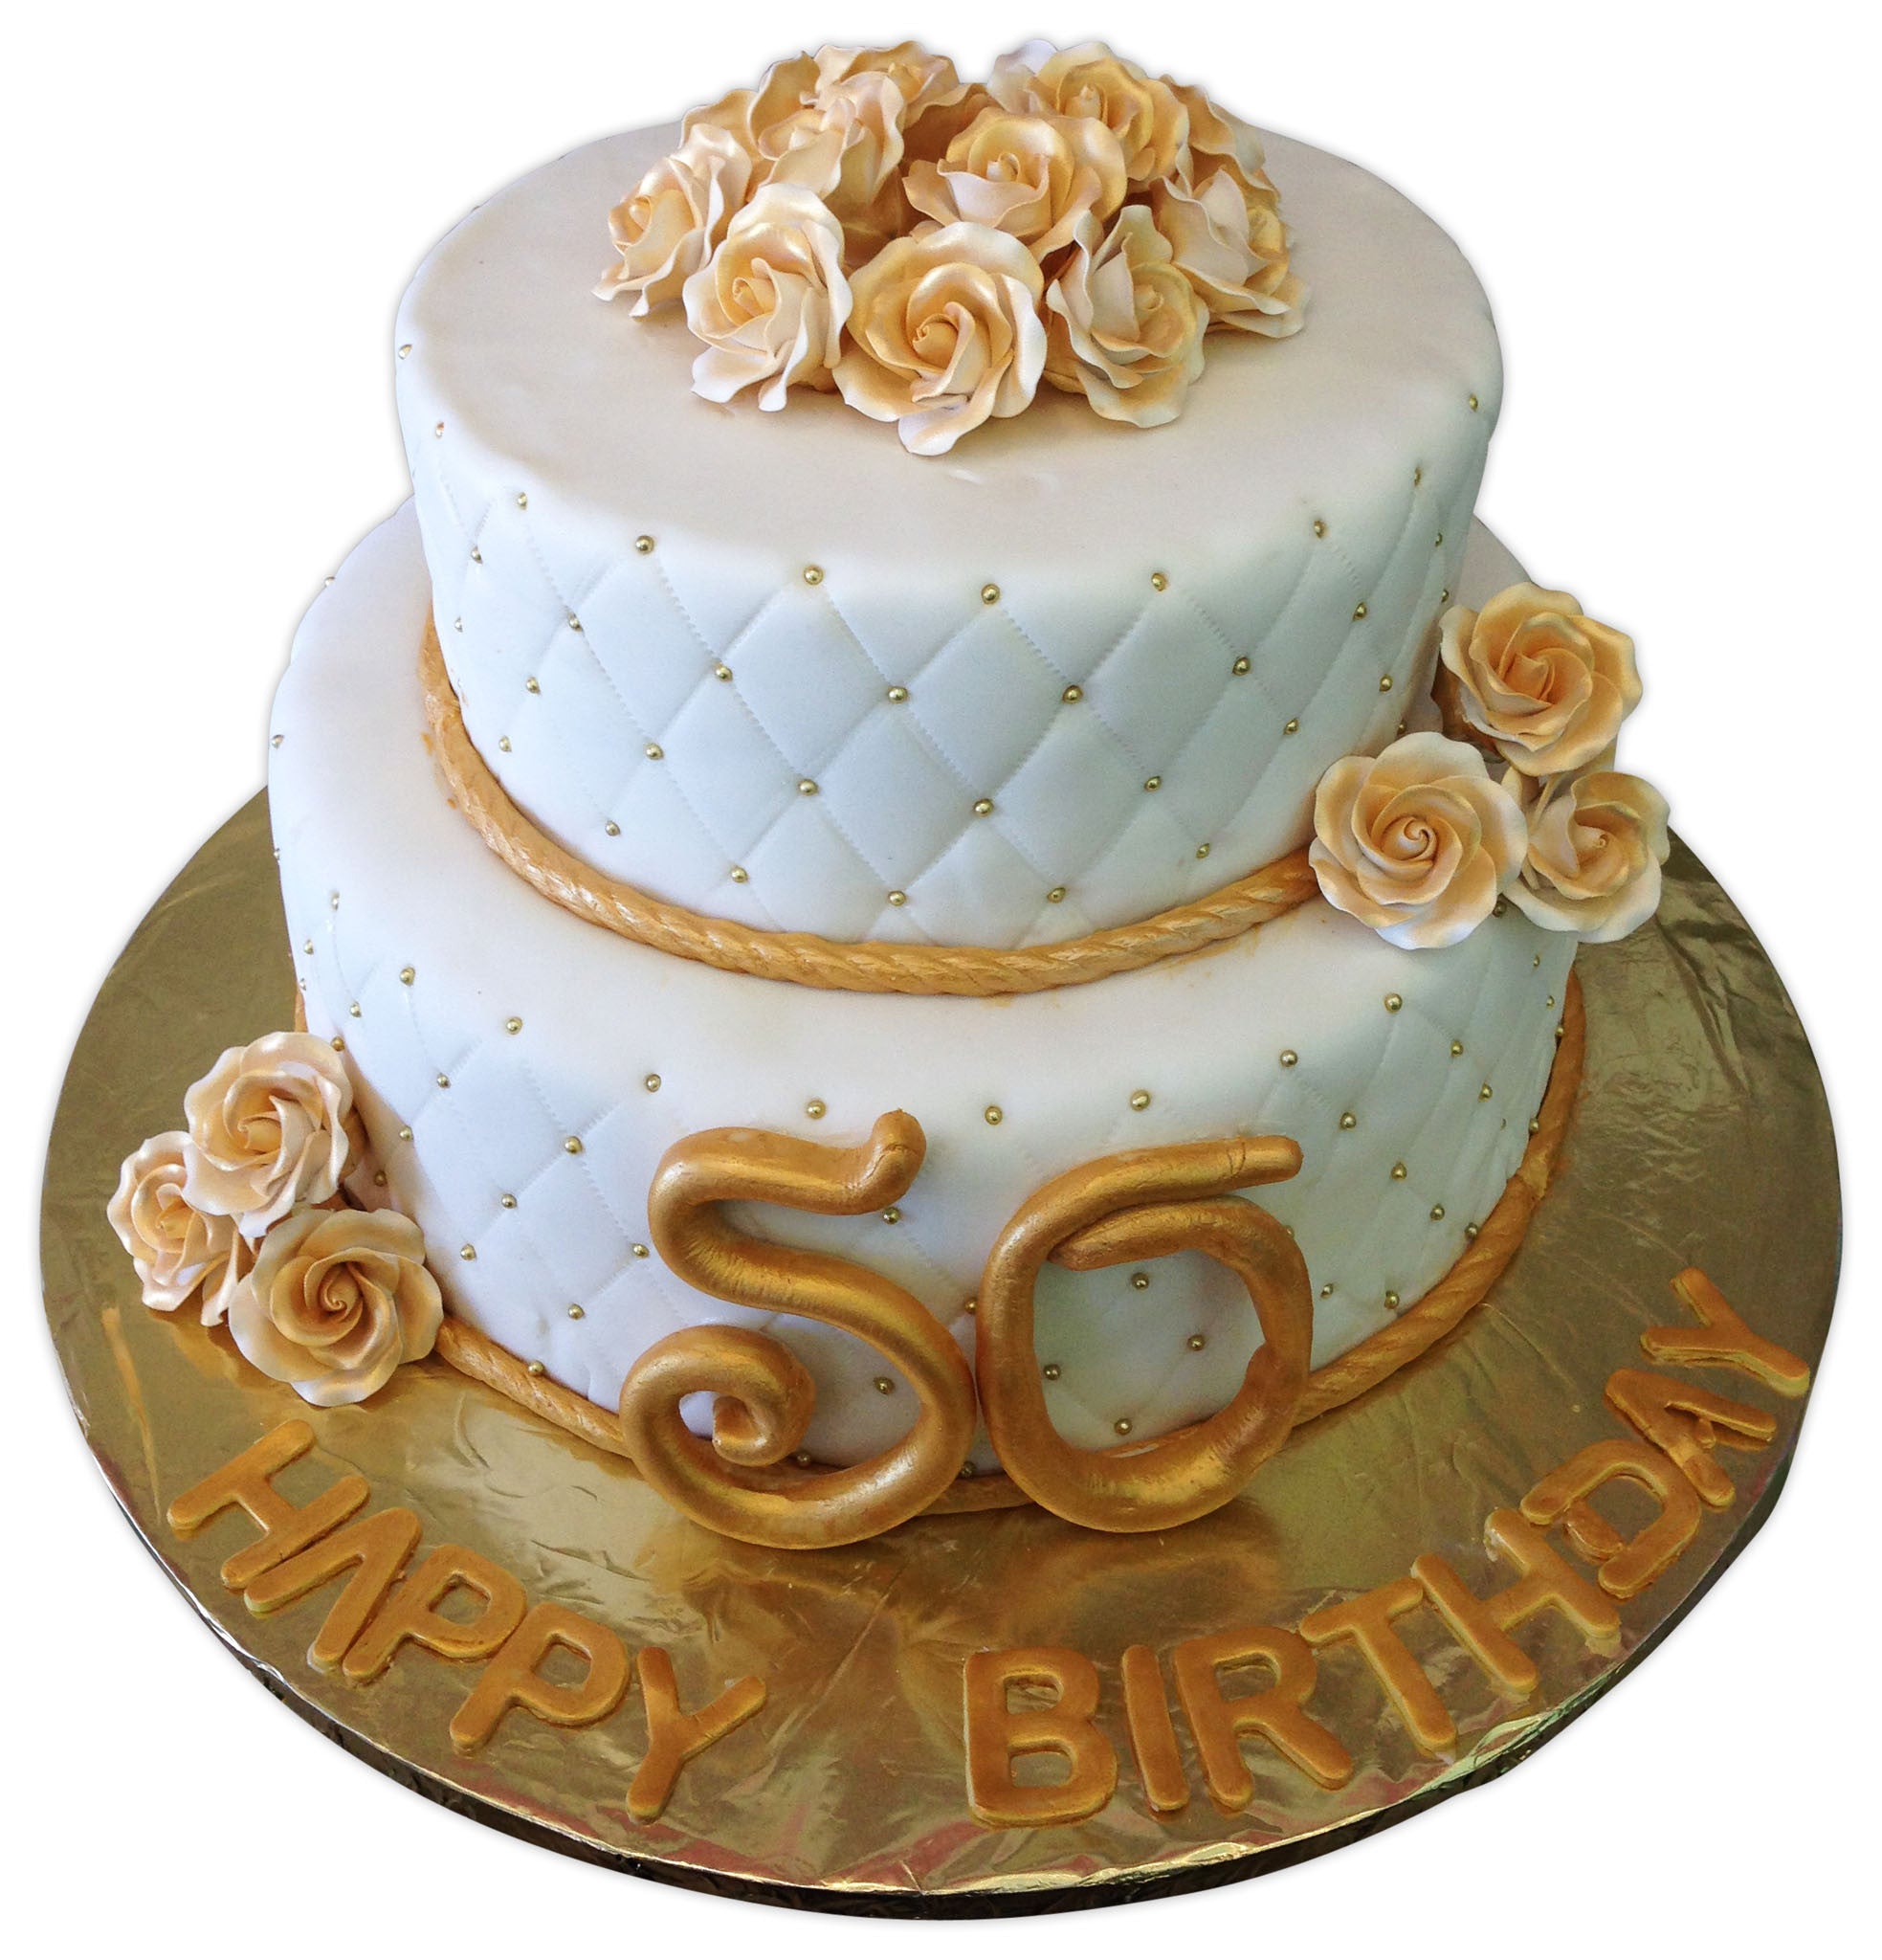 50th Birthday Cake - The Cake Mixer | The Cake Mixer